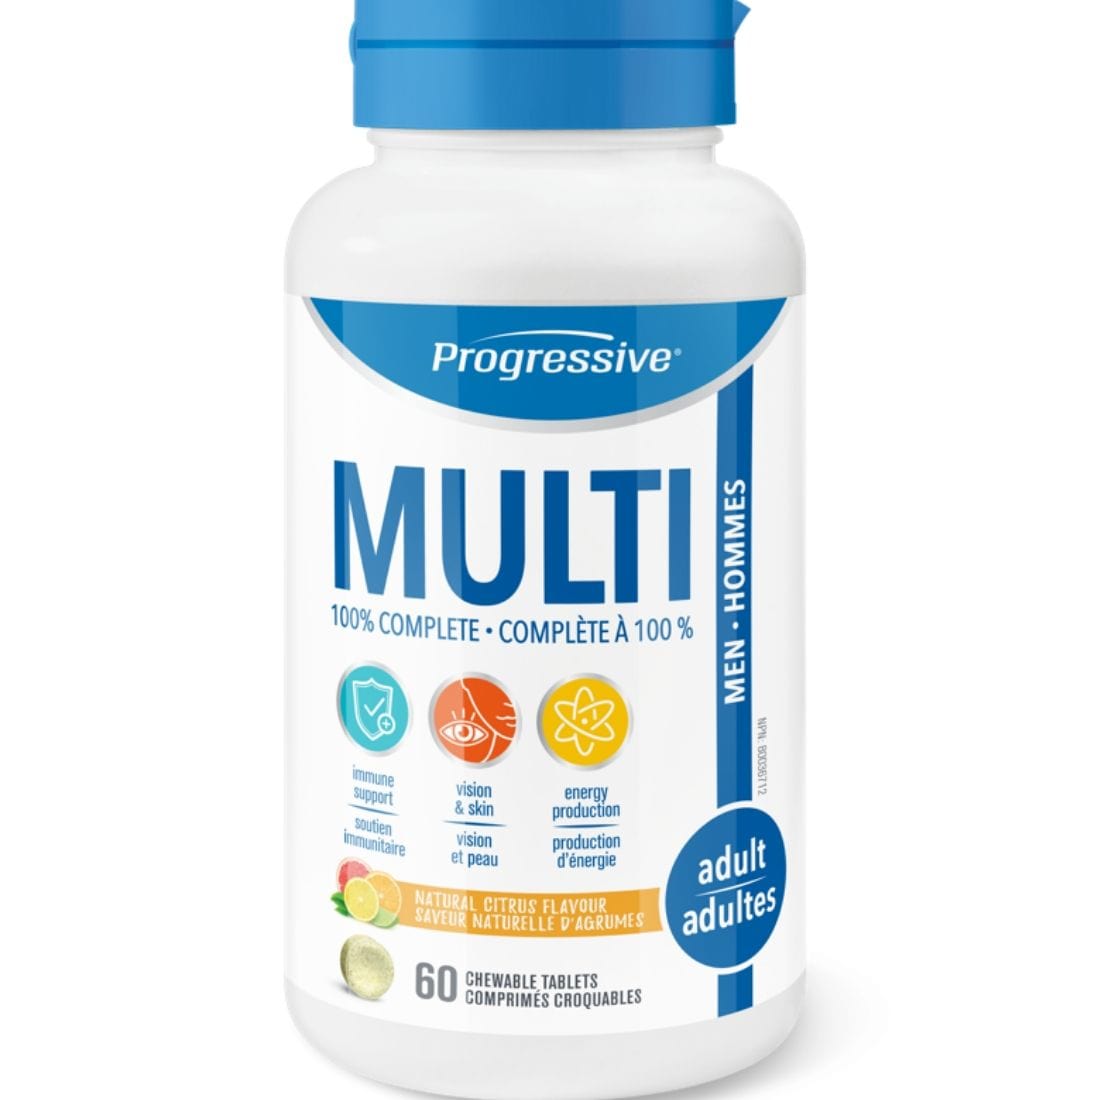 Progressive Chewable MultiVitamins For Adult Men, 60 Chewable Tablets